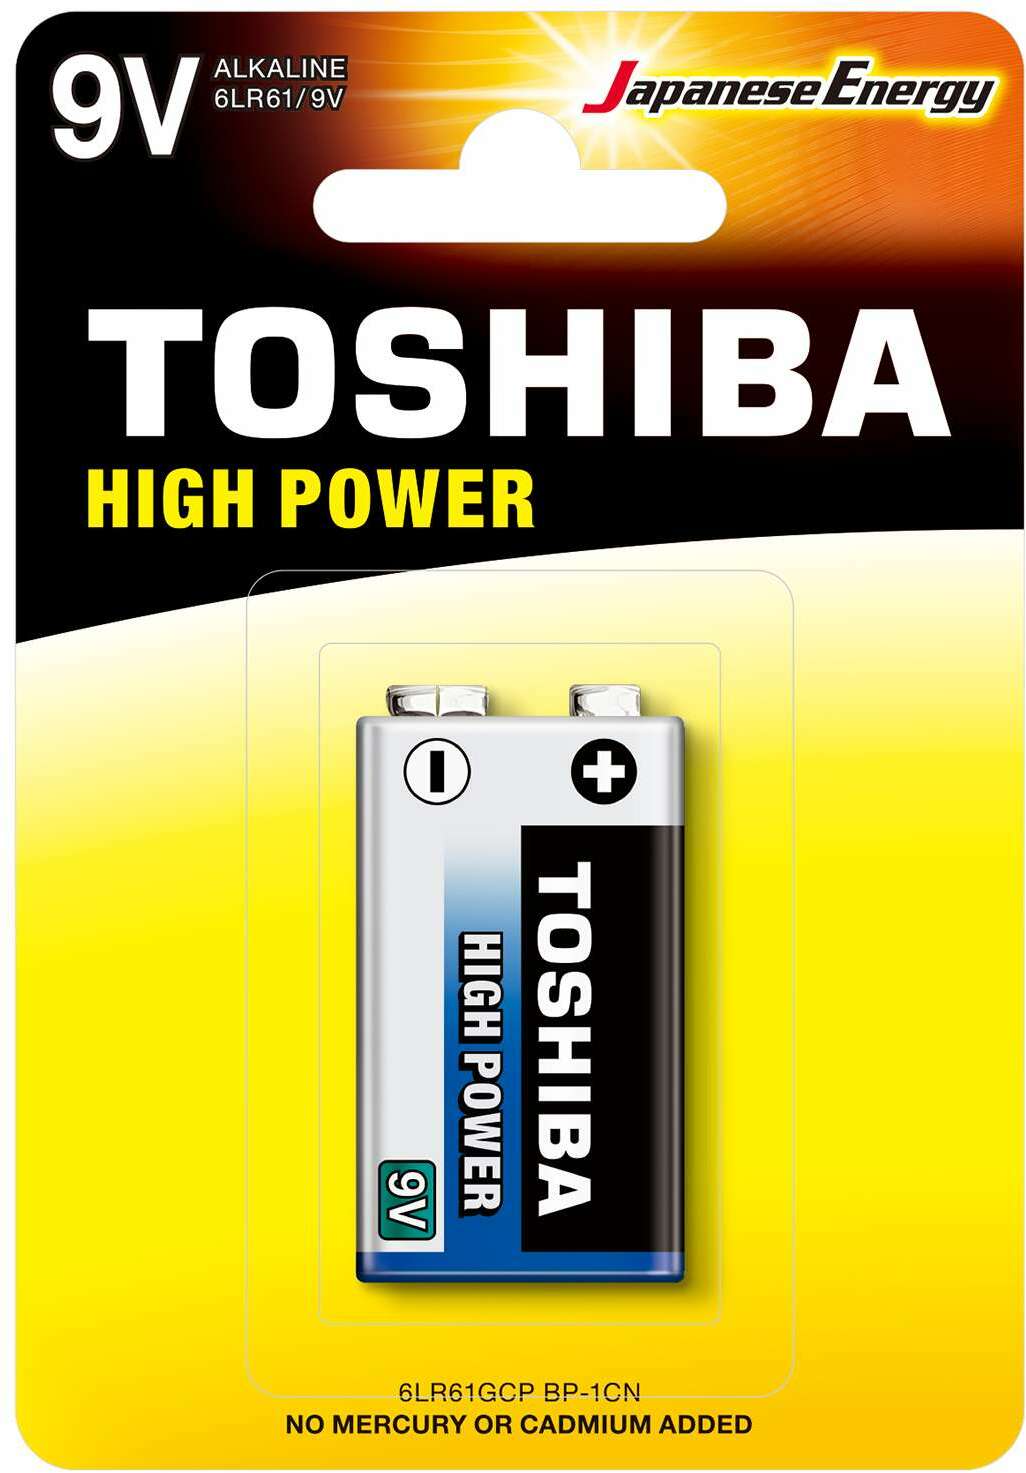 Toshiba 6lr61 - 9v - Pile / Accu / Batterie - Main picture